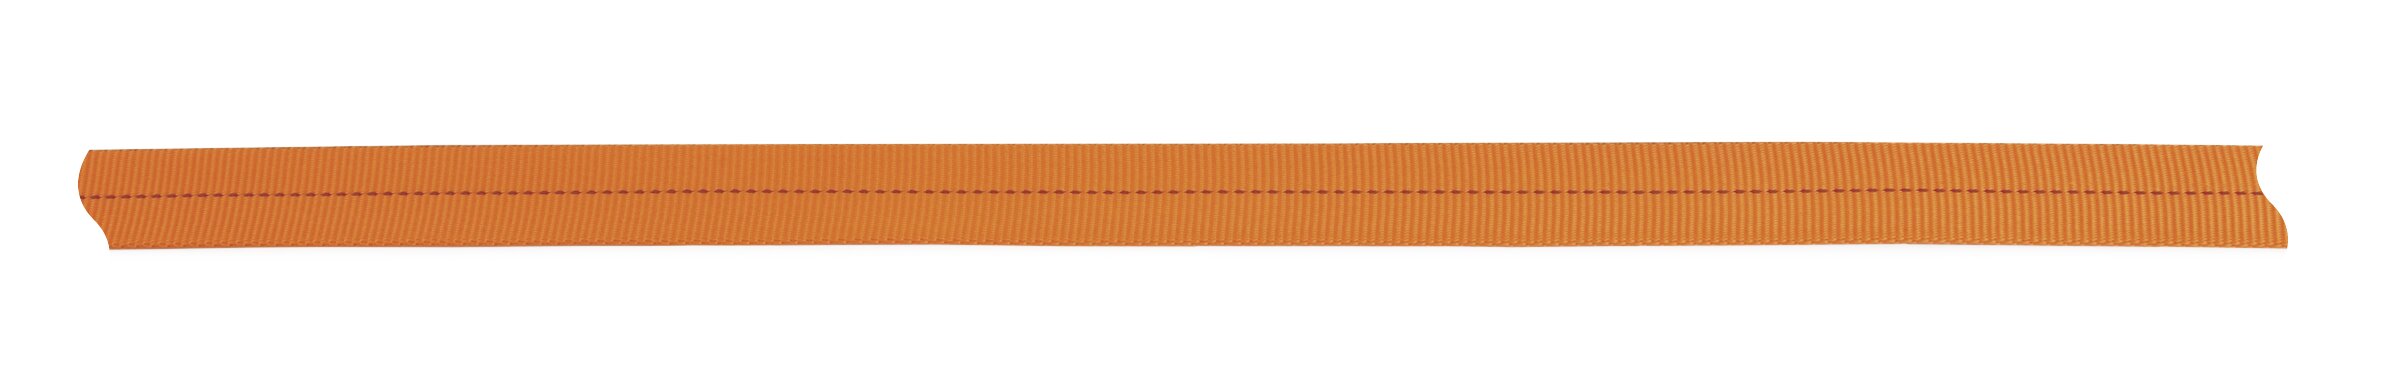 CMC Rescue Static-Pro Lifeline 200ft Length 1/2 Inch Rope, Orange/White